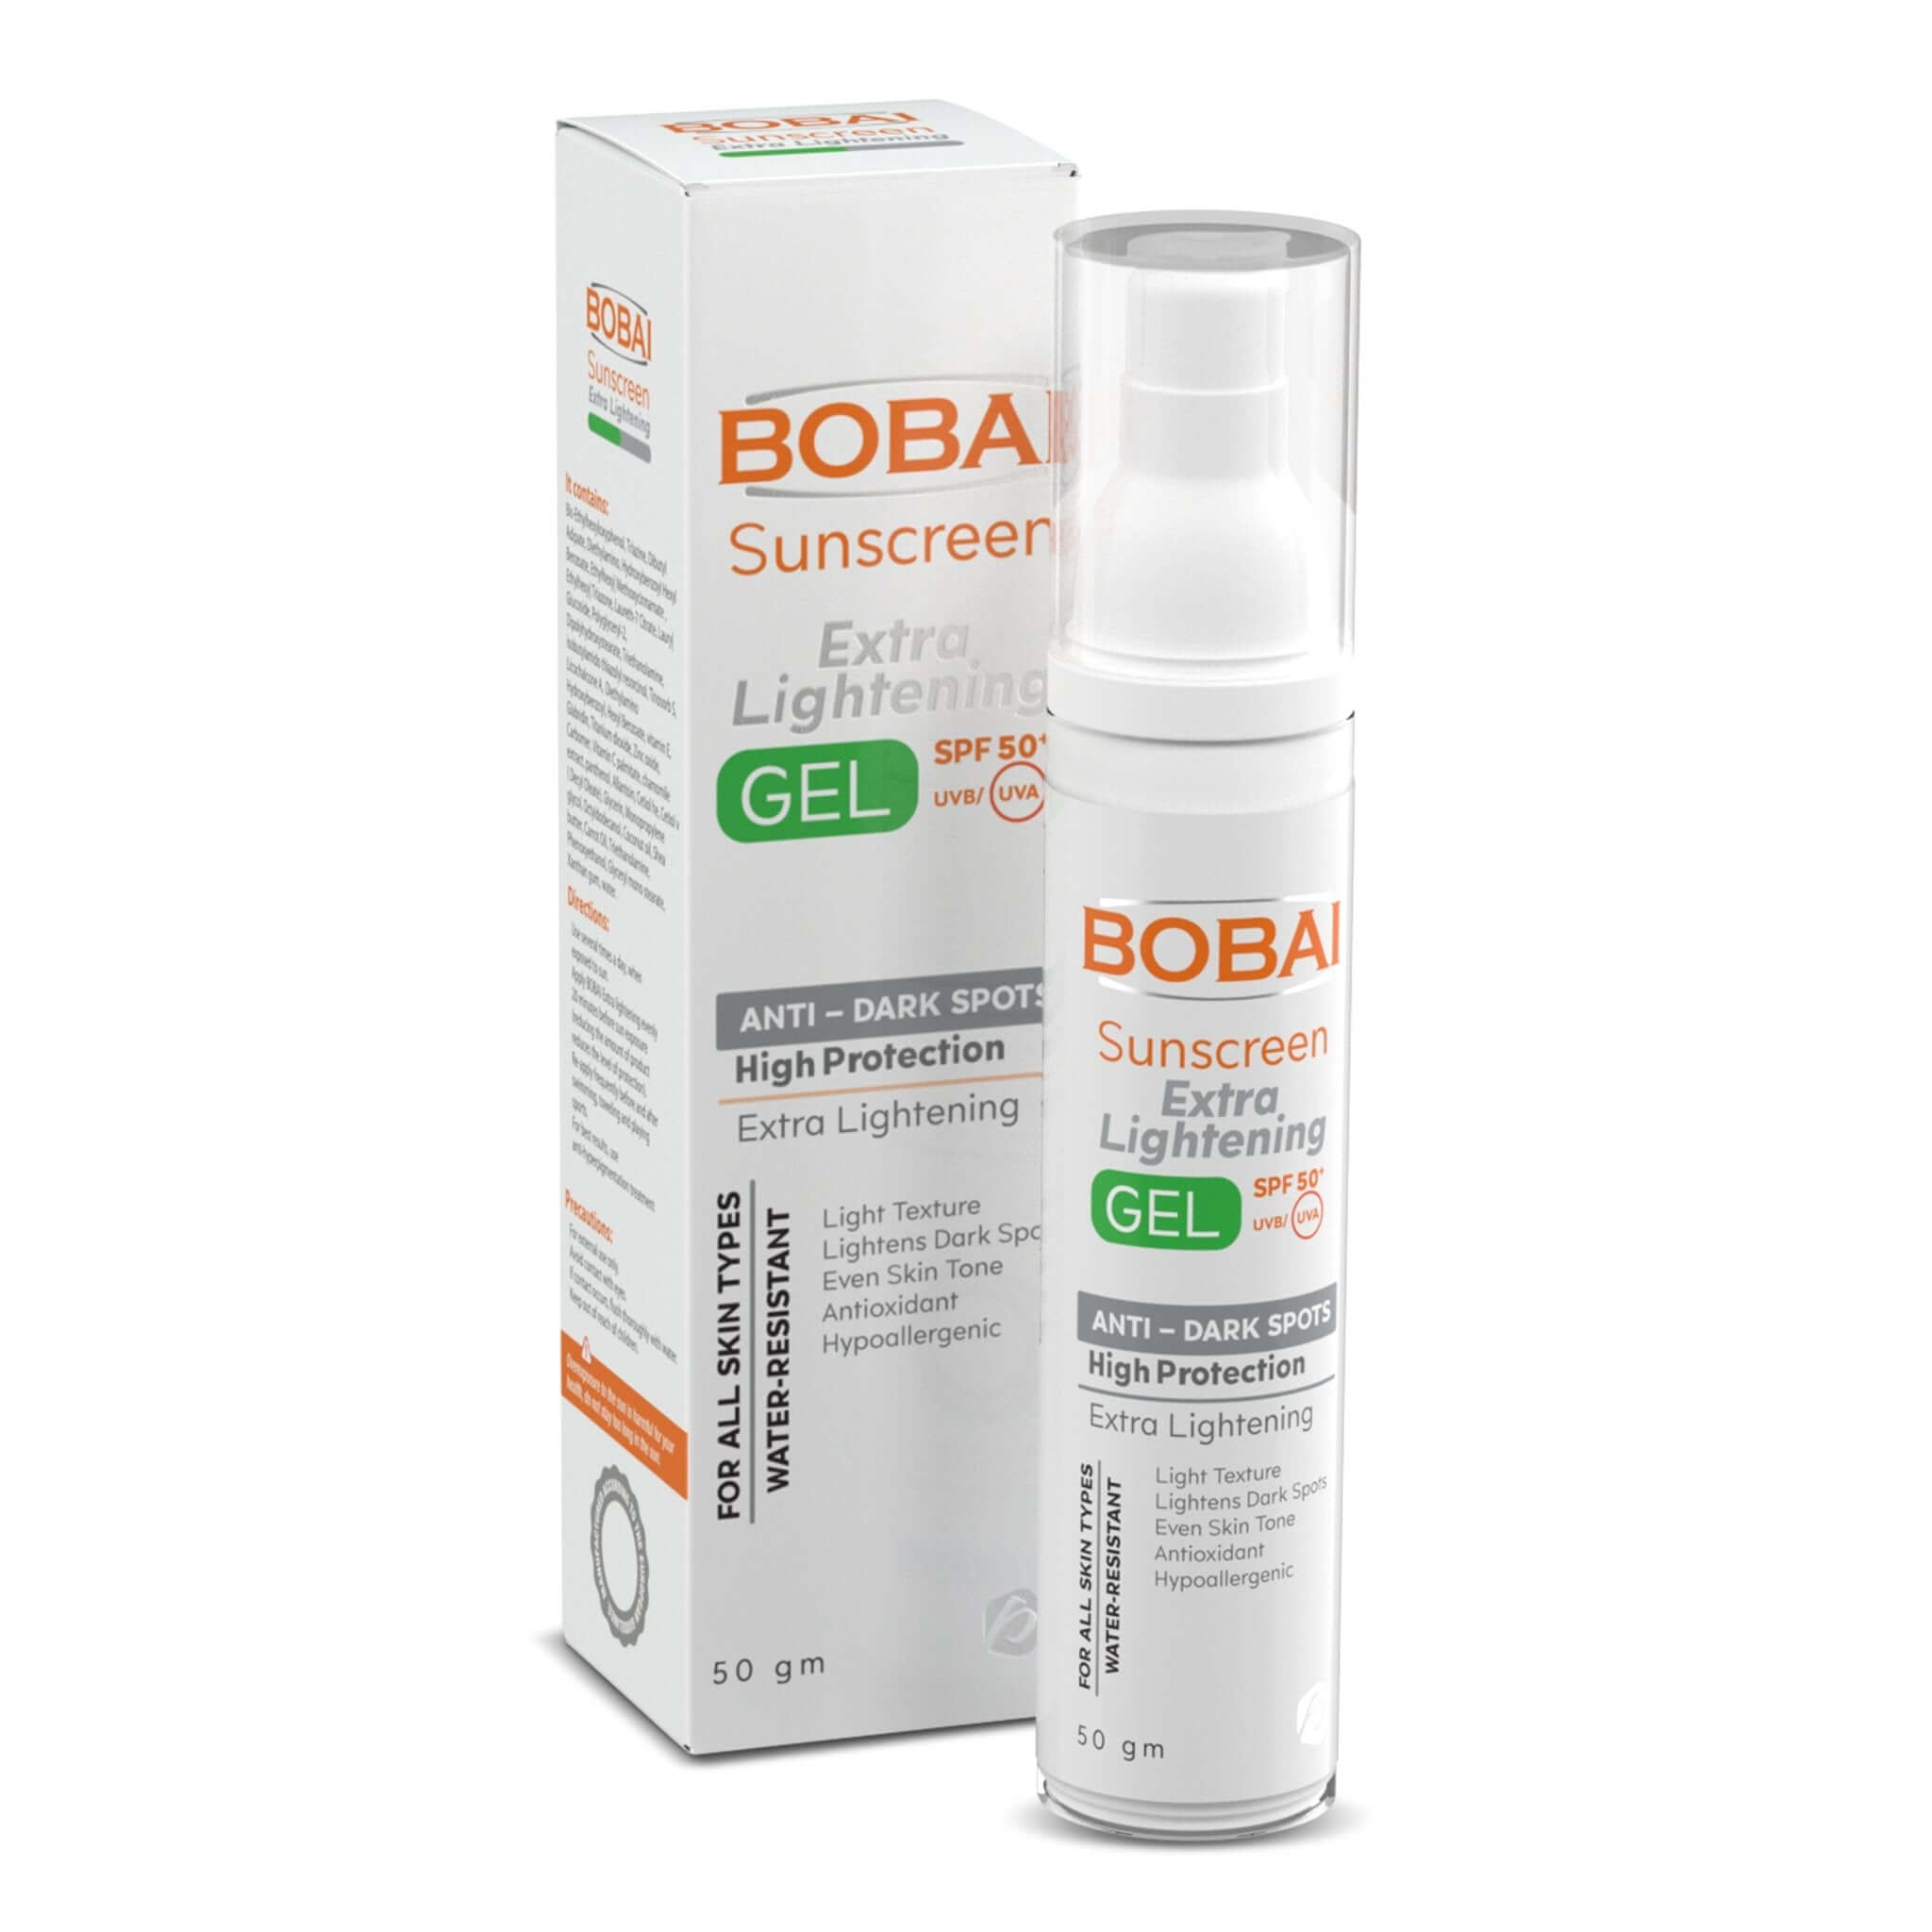 Bobai Sunscreen Extra Lightening gel spf 50